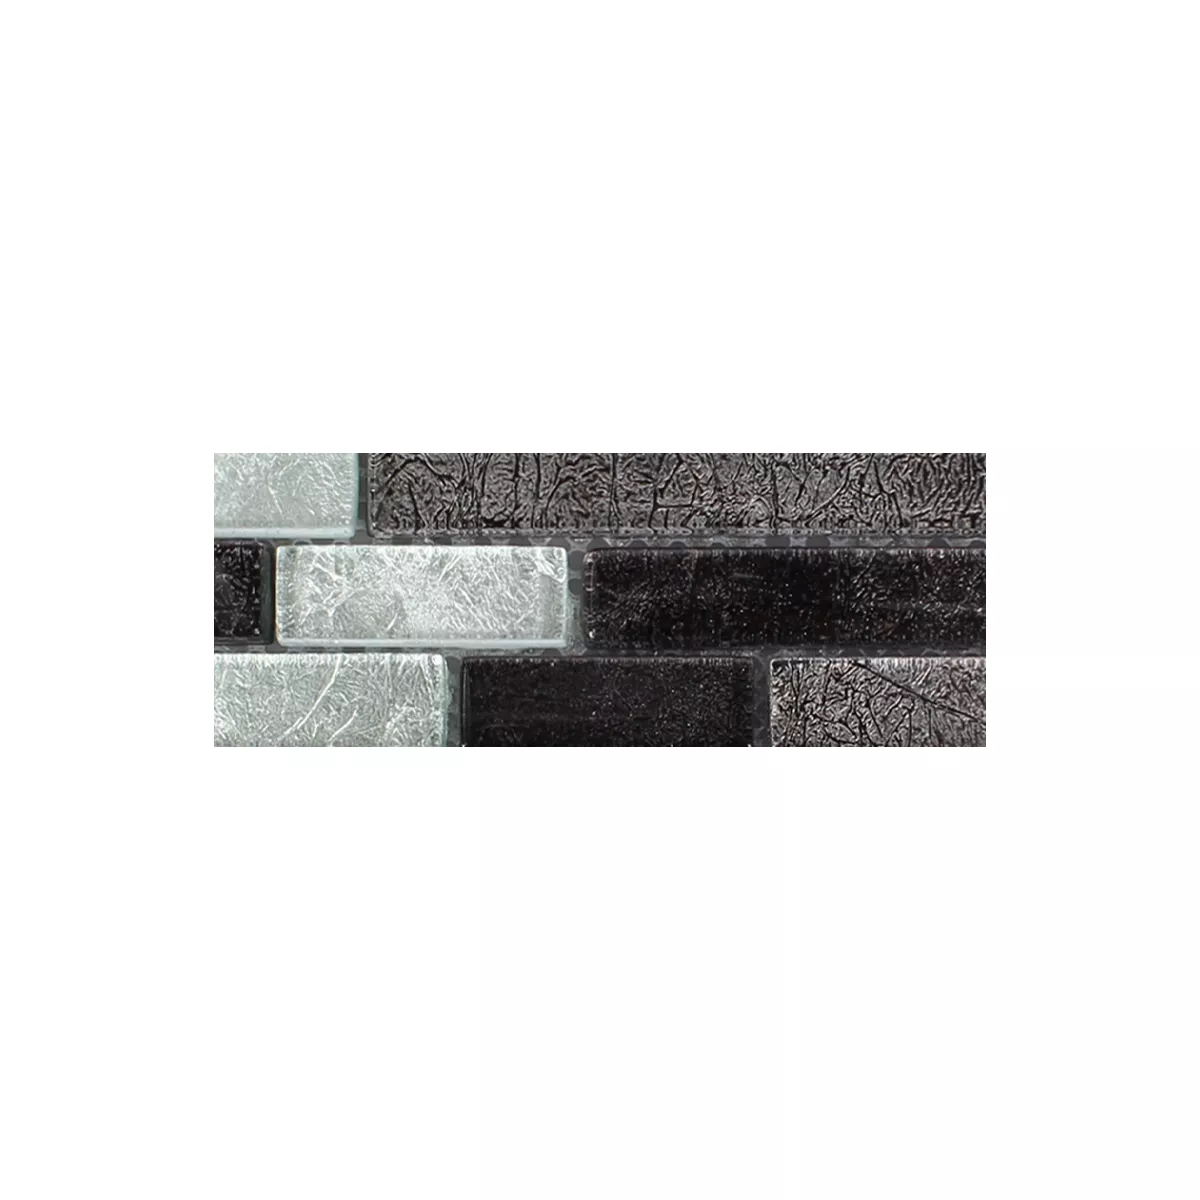 Campione Mosaico Vetro Piastrella Curlew Nero Argento Pattern